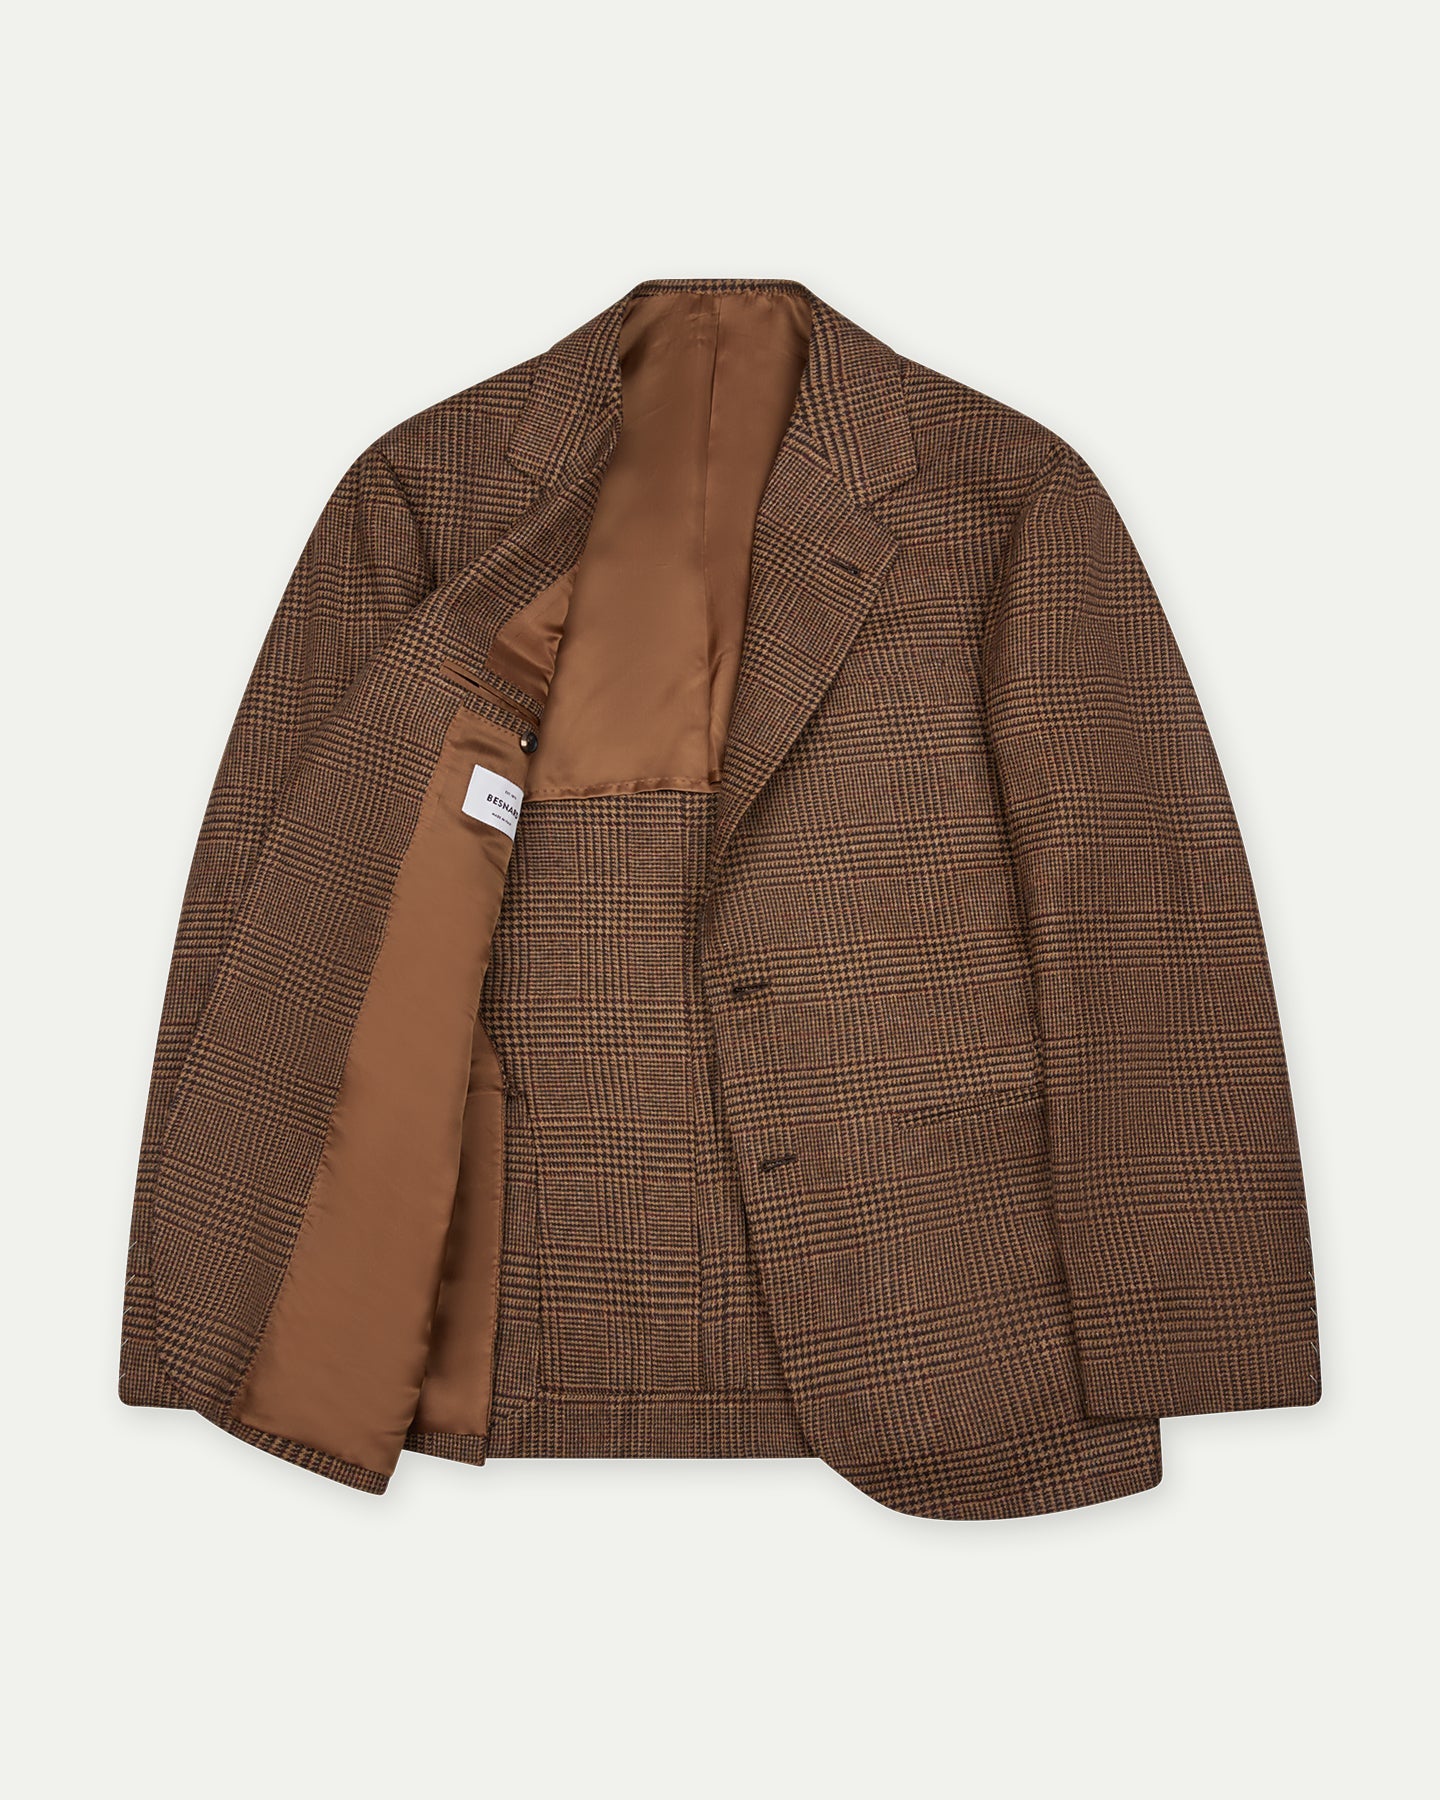 Made-To-Order Sport Coat Brown Prince of Wales Merino Wool